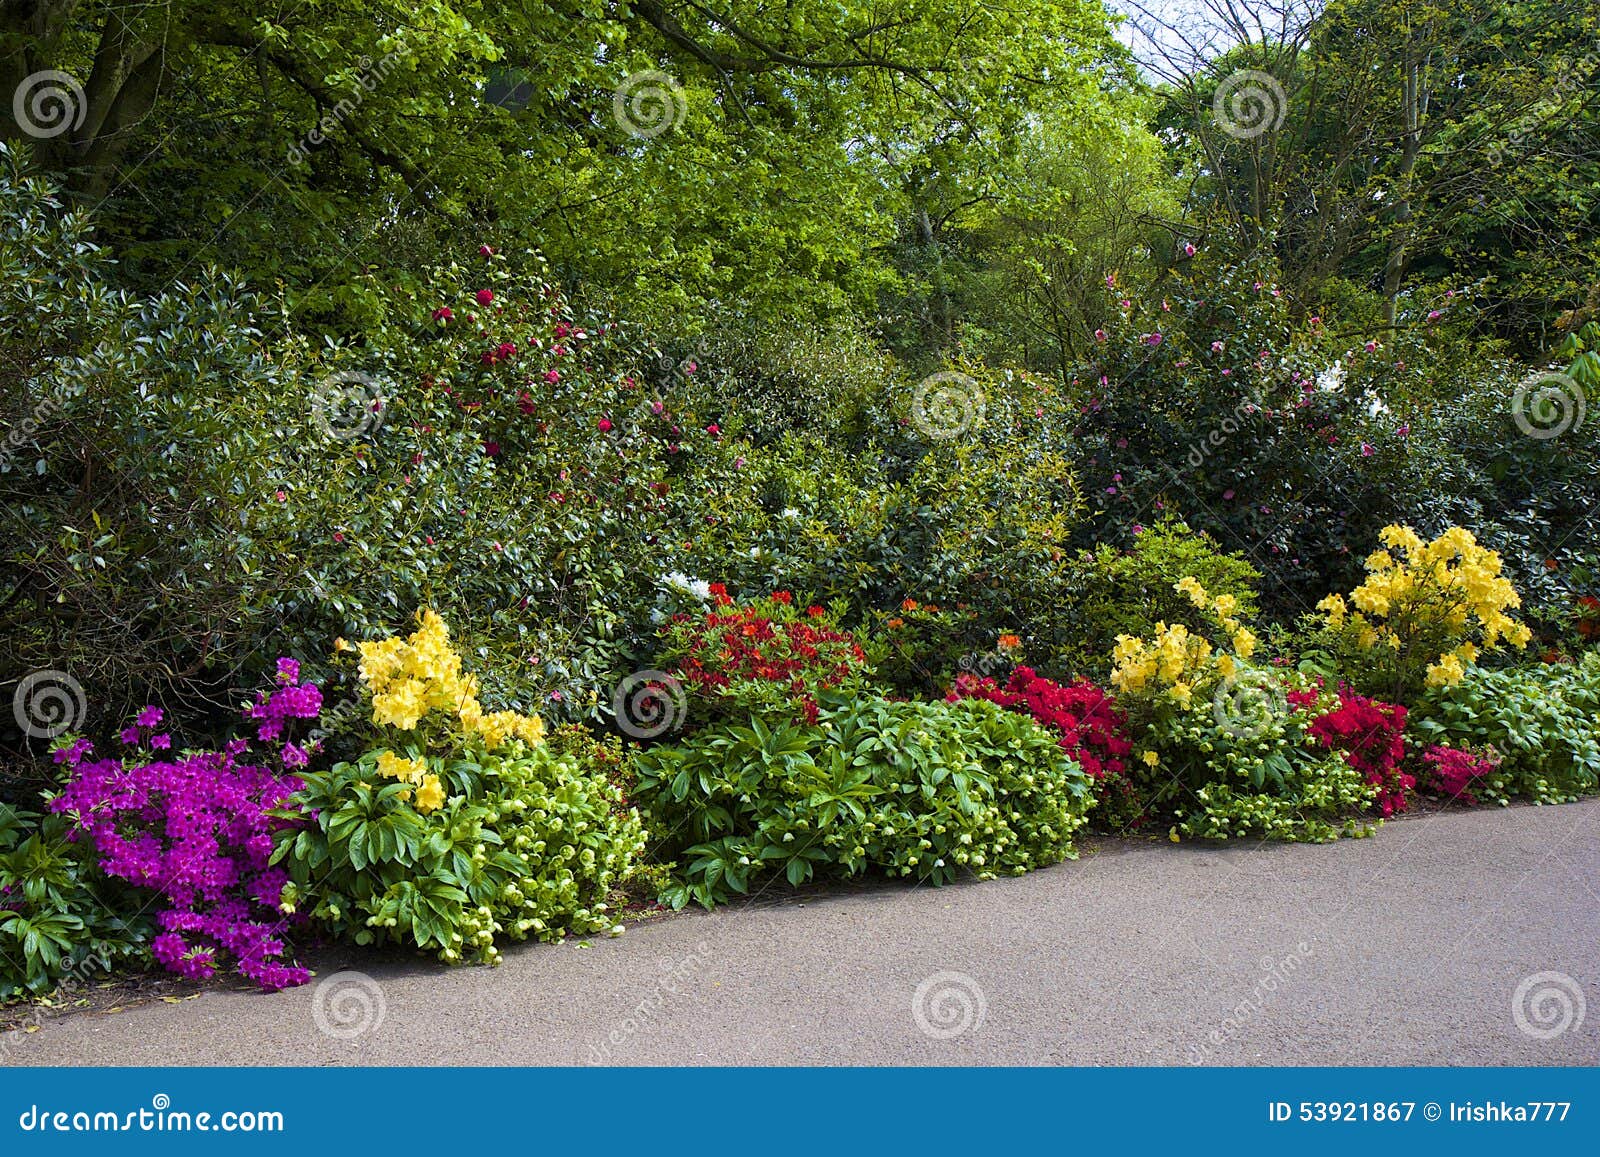 flower garden in greenwich park, london stock image - image of